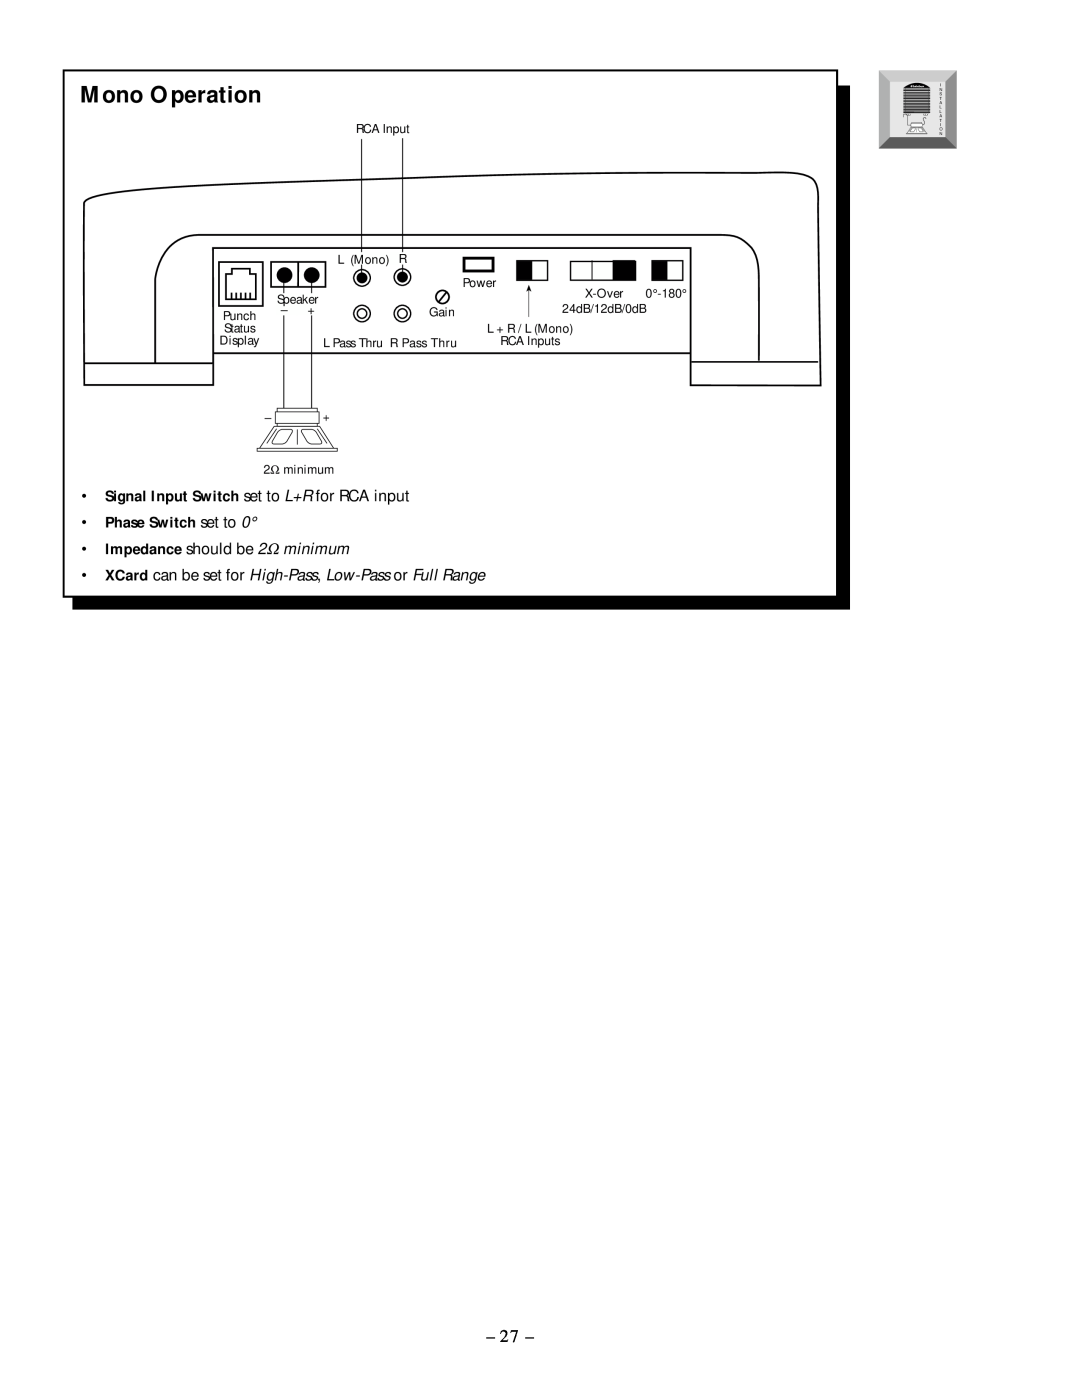 Rockford Fosgate 250.1 manual Mono Operation, Phase Switch set to, minimum 